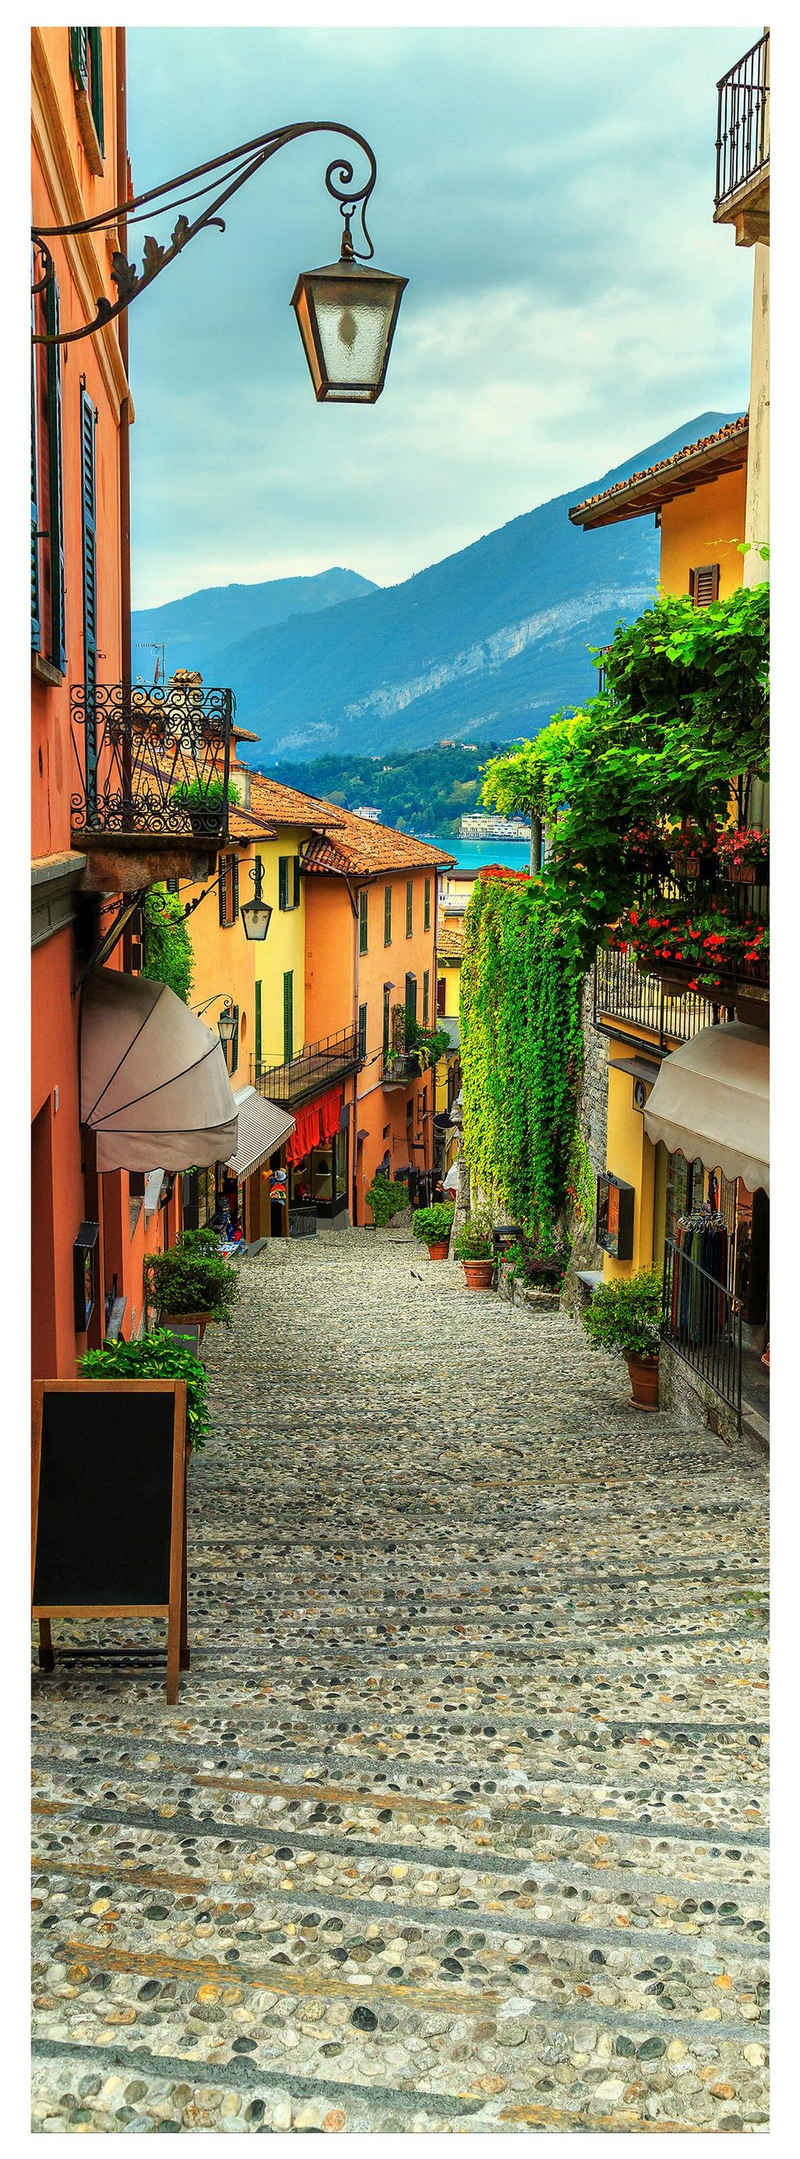 wandmotiv24 Türtapete Gasse mit Blick auf Berge & See, Italien, glatt, Fototapete, Wandtapete, Motivtapete, matt, selbstklebende Dekorfolie